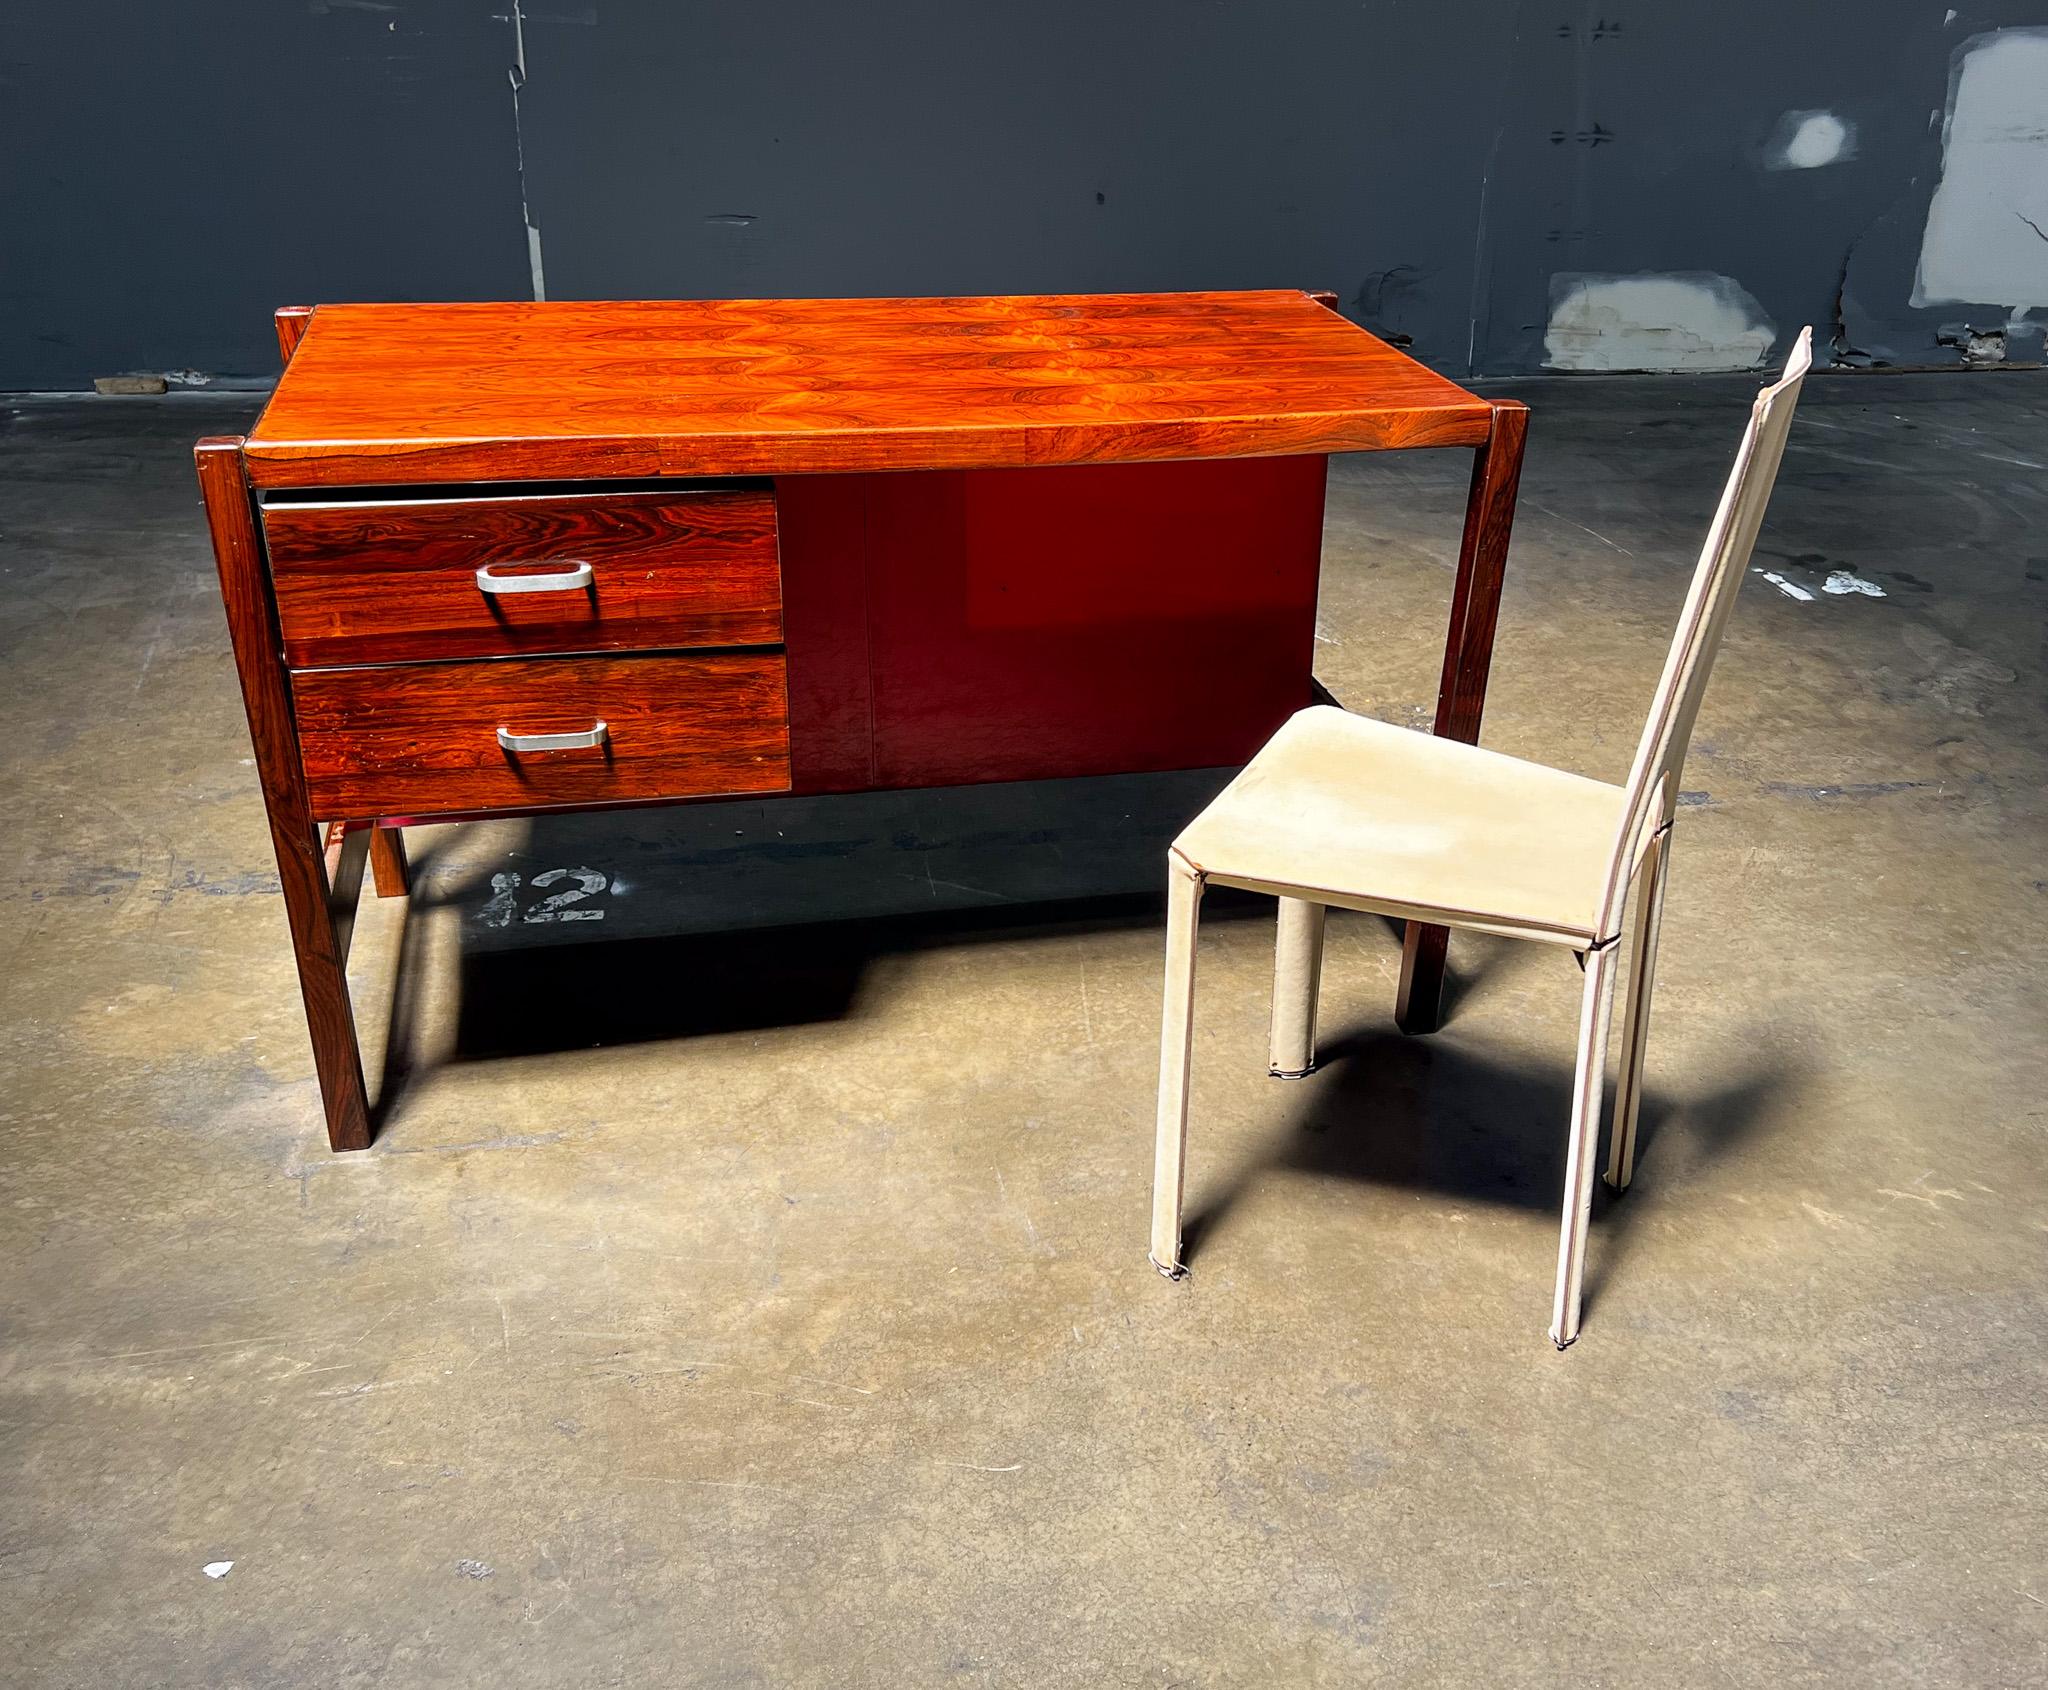 Mid-CenturyModern Desk in Hardwood by Jorge Zalszupin for L’atelier, c. 1960s For Sale 9